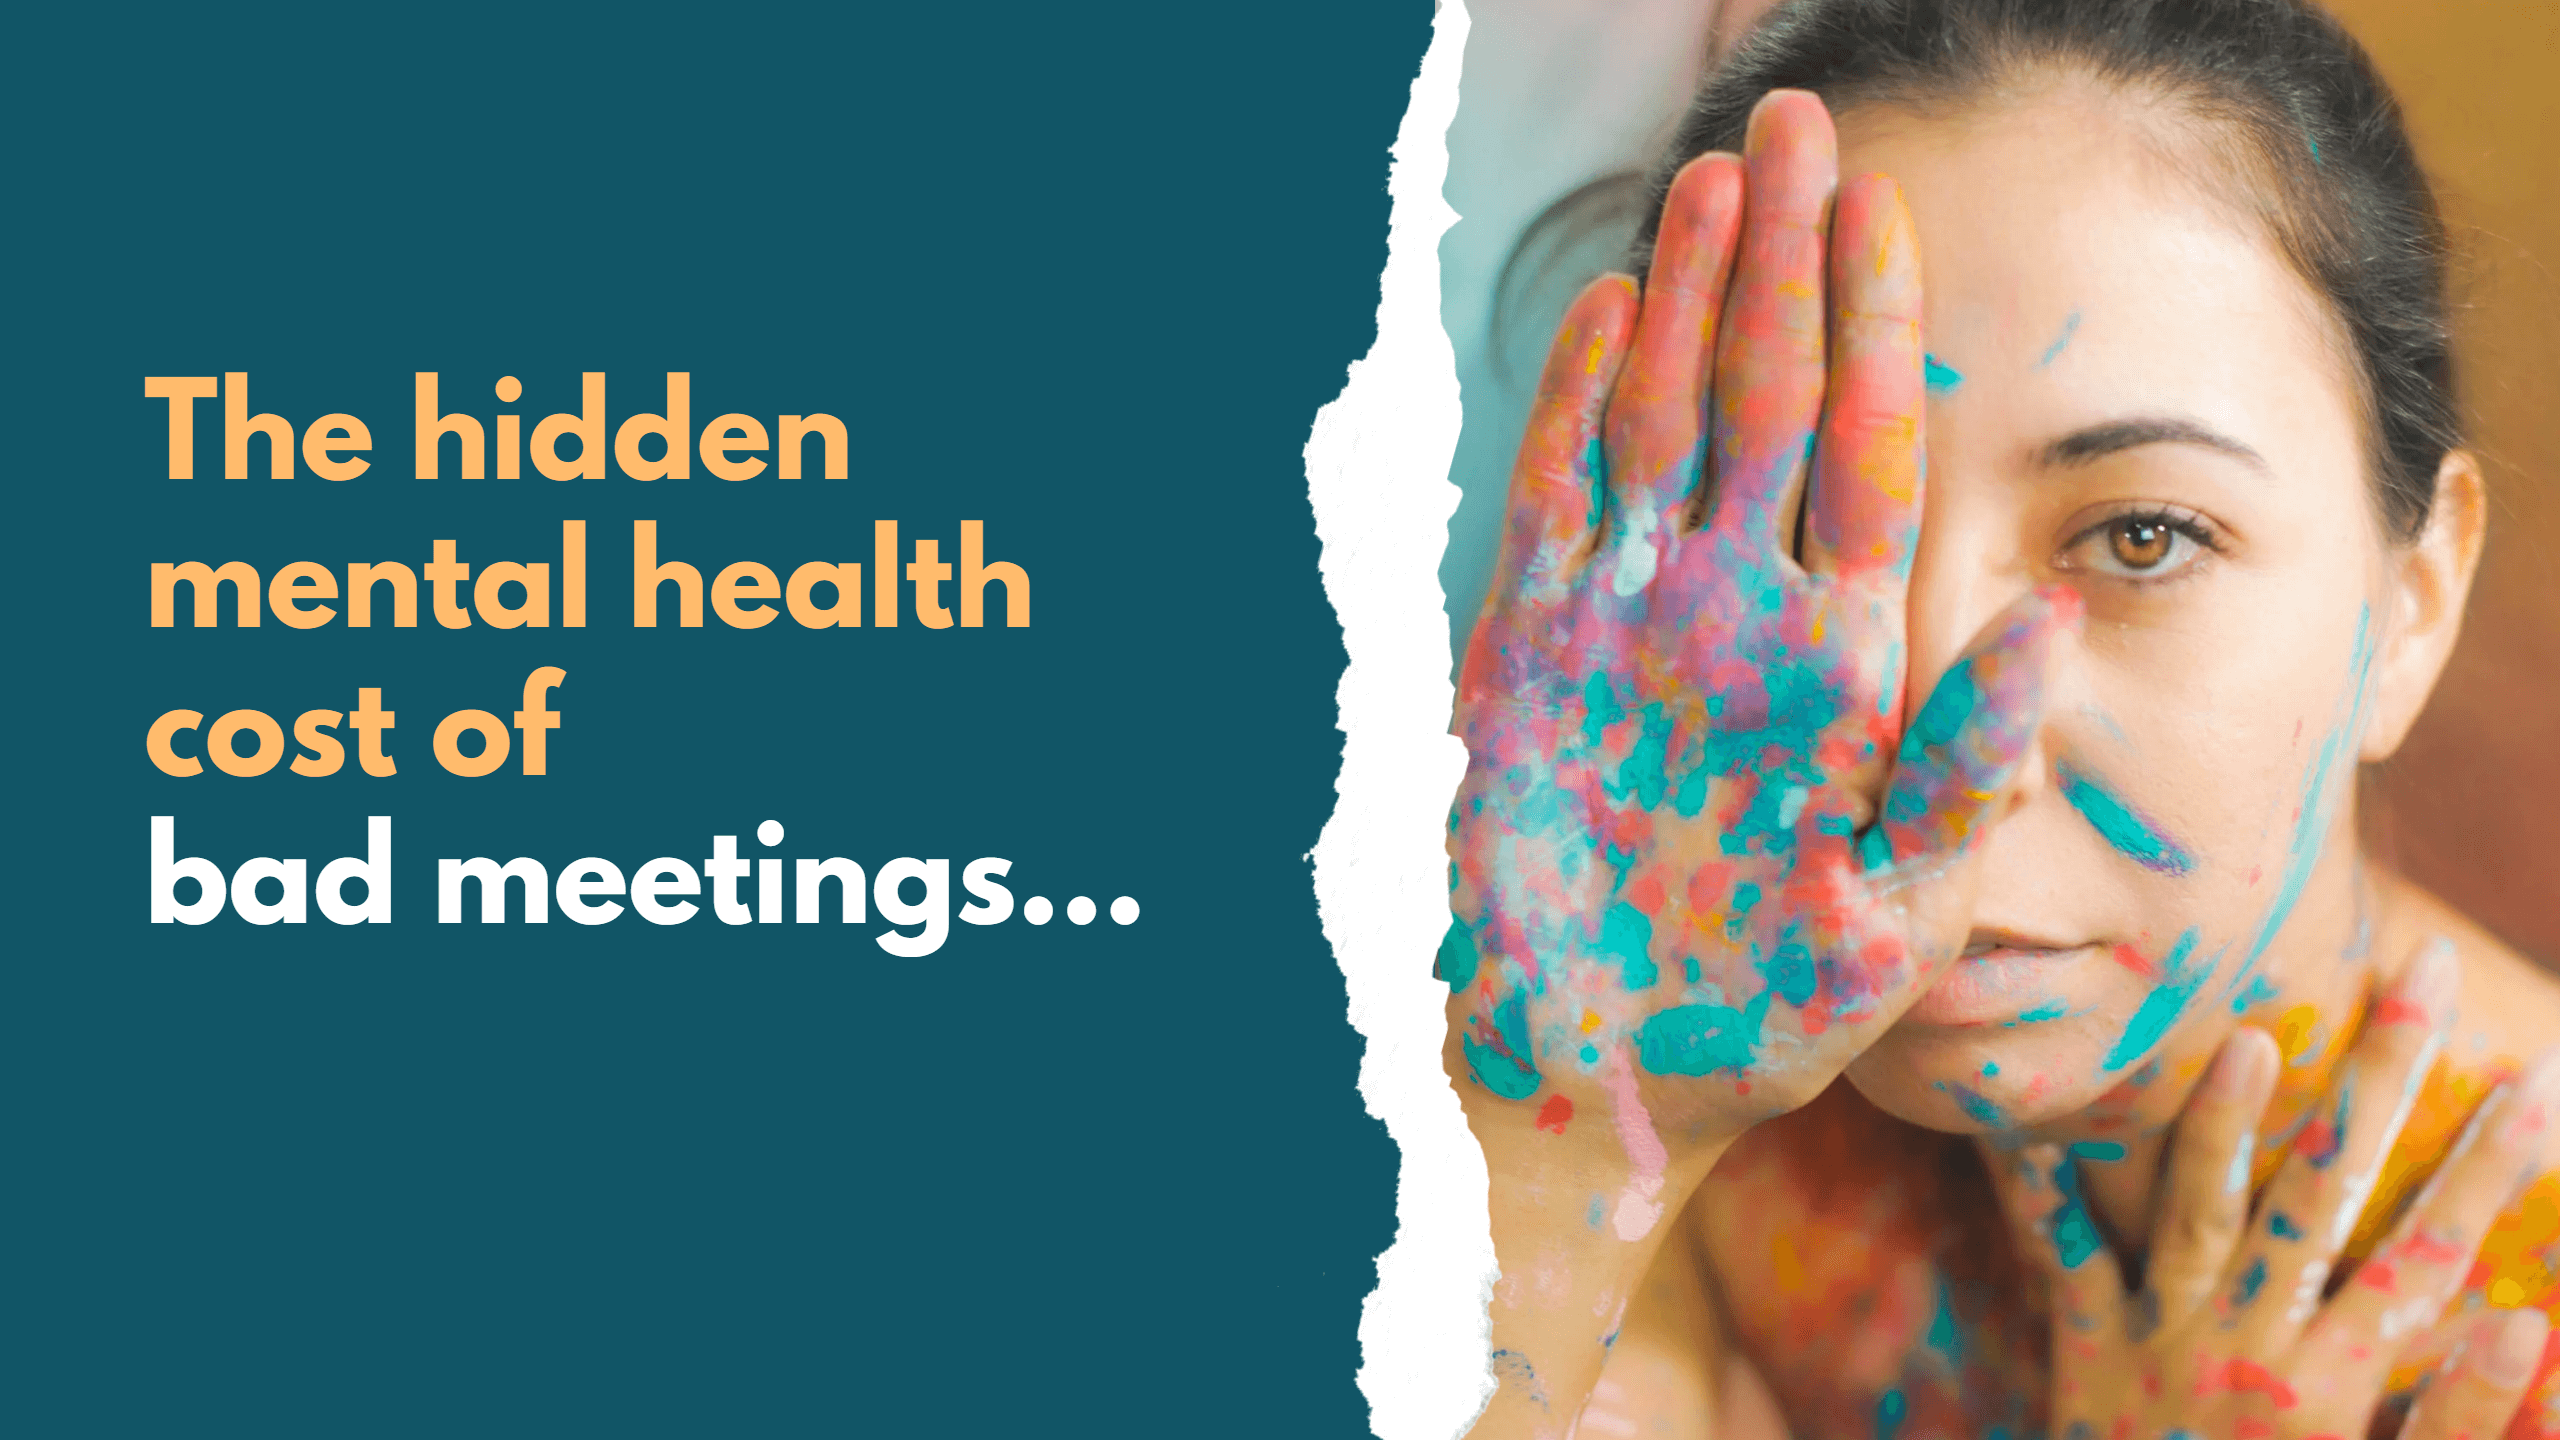 The hidden mental health cost of bad meetings